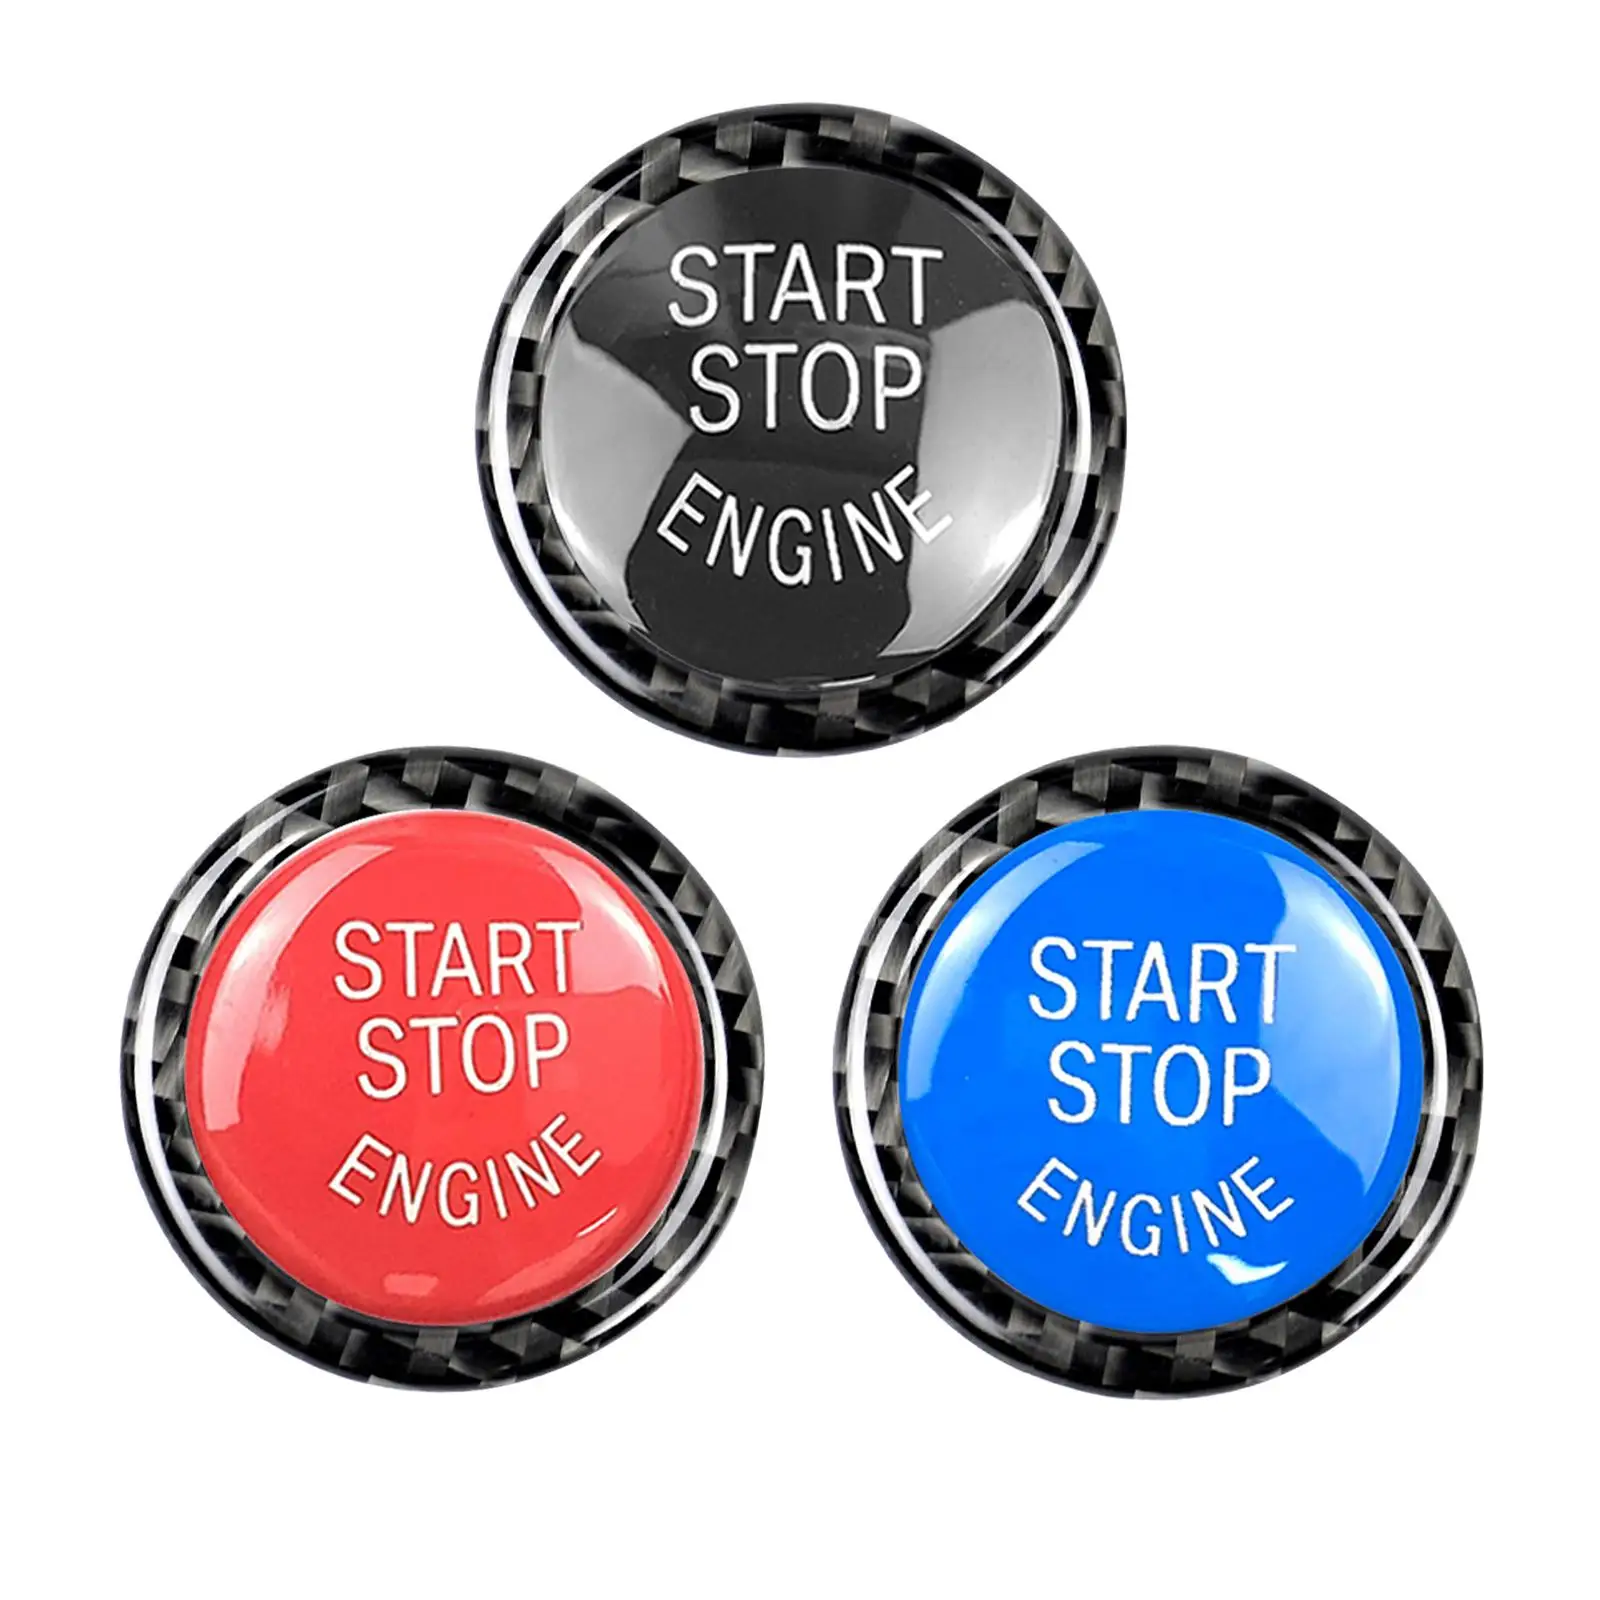 Engine Start Stop Button Cover Replace Cover Anti Scratch Protective Cover Sticker Cover Fit for E90 E92 E93 Accessories